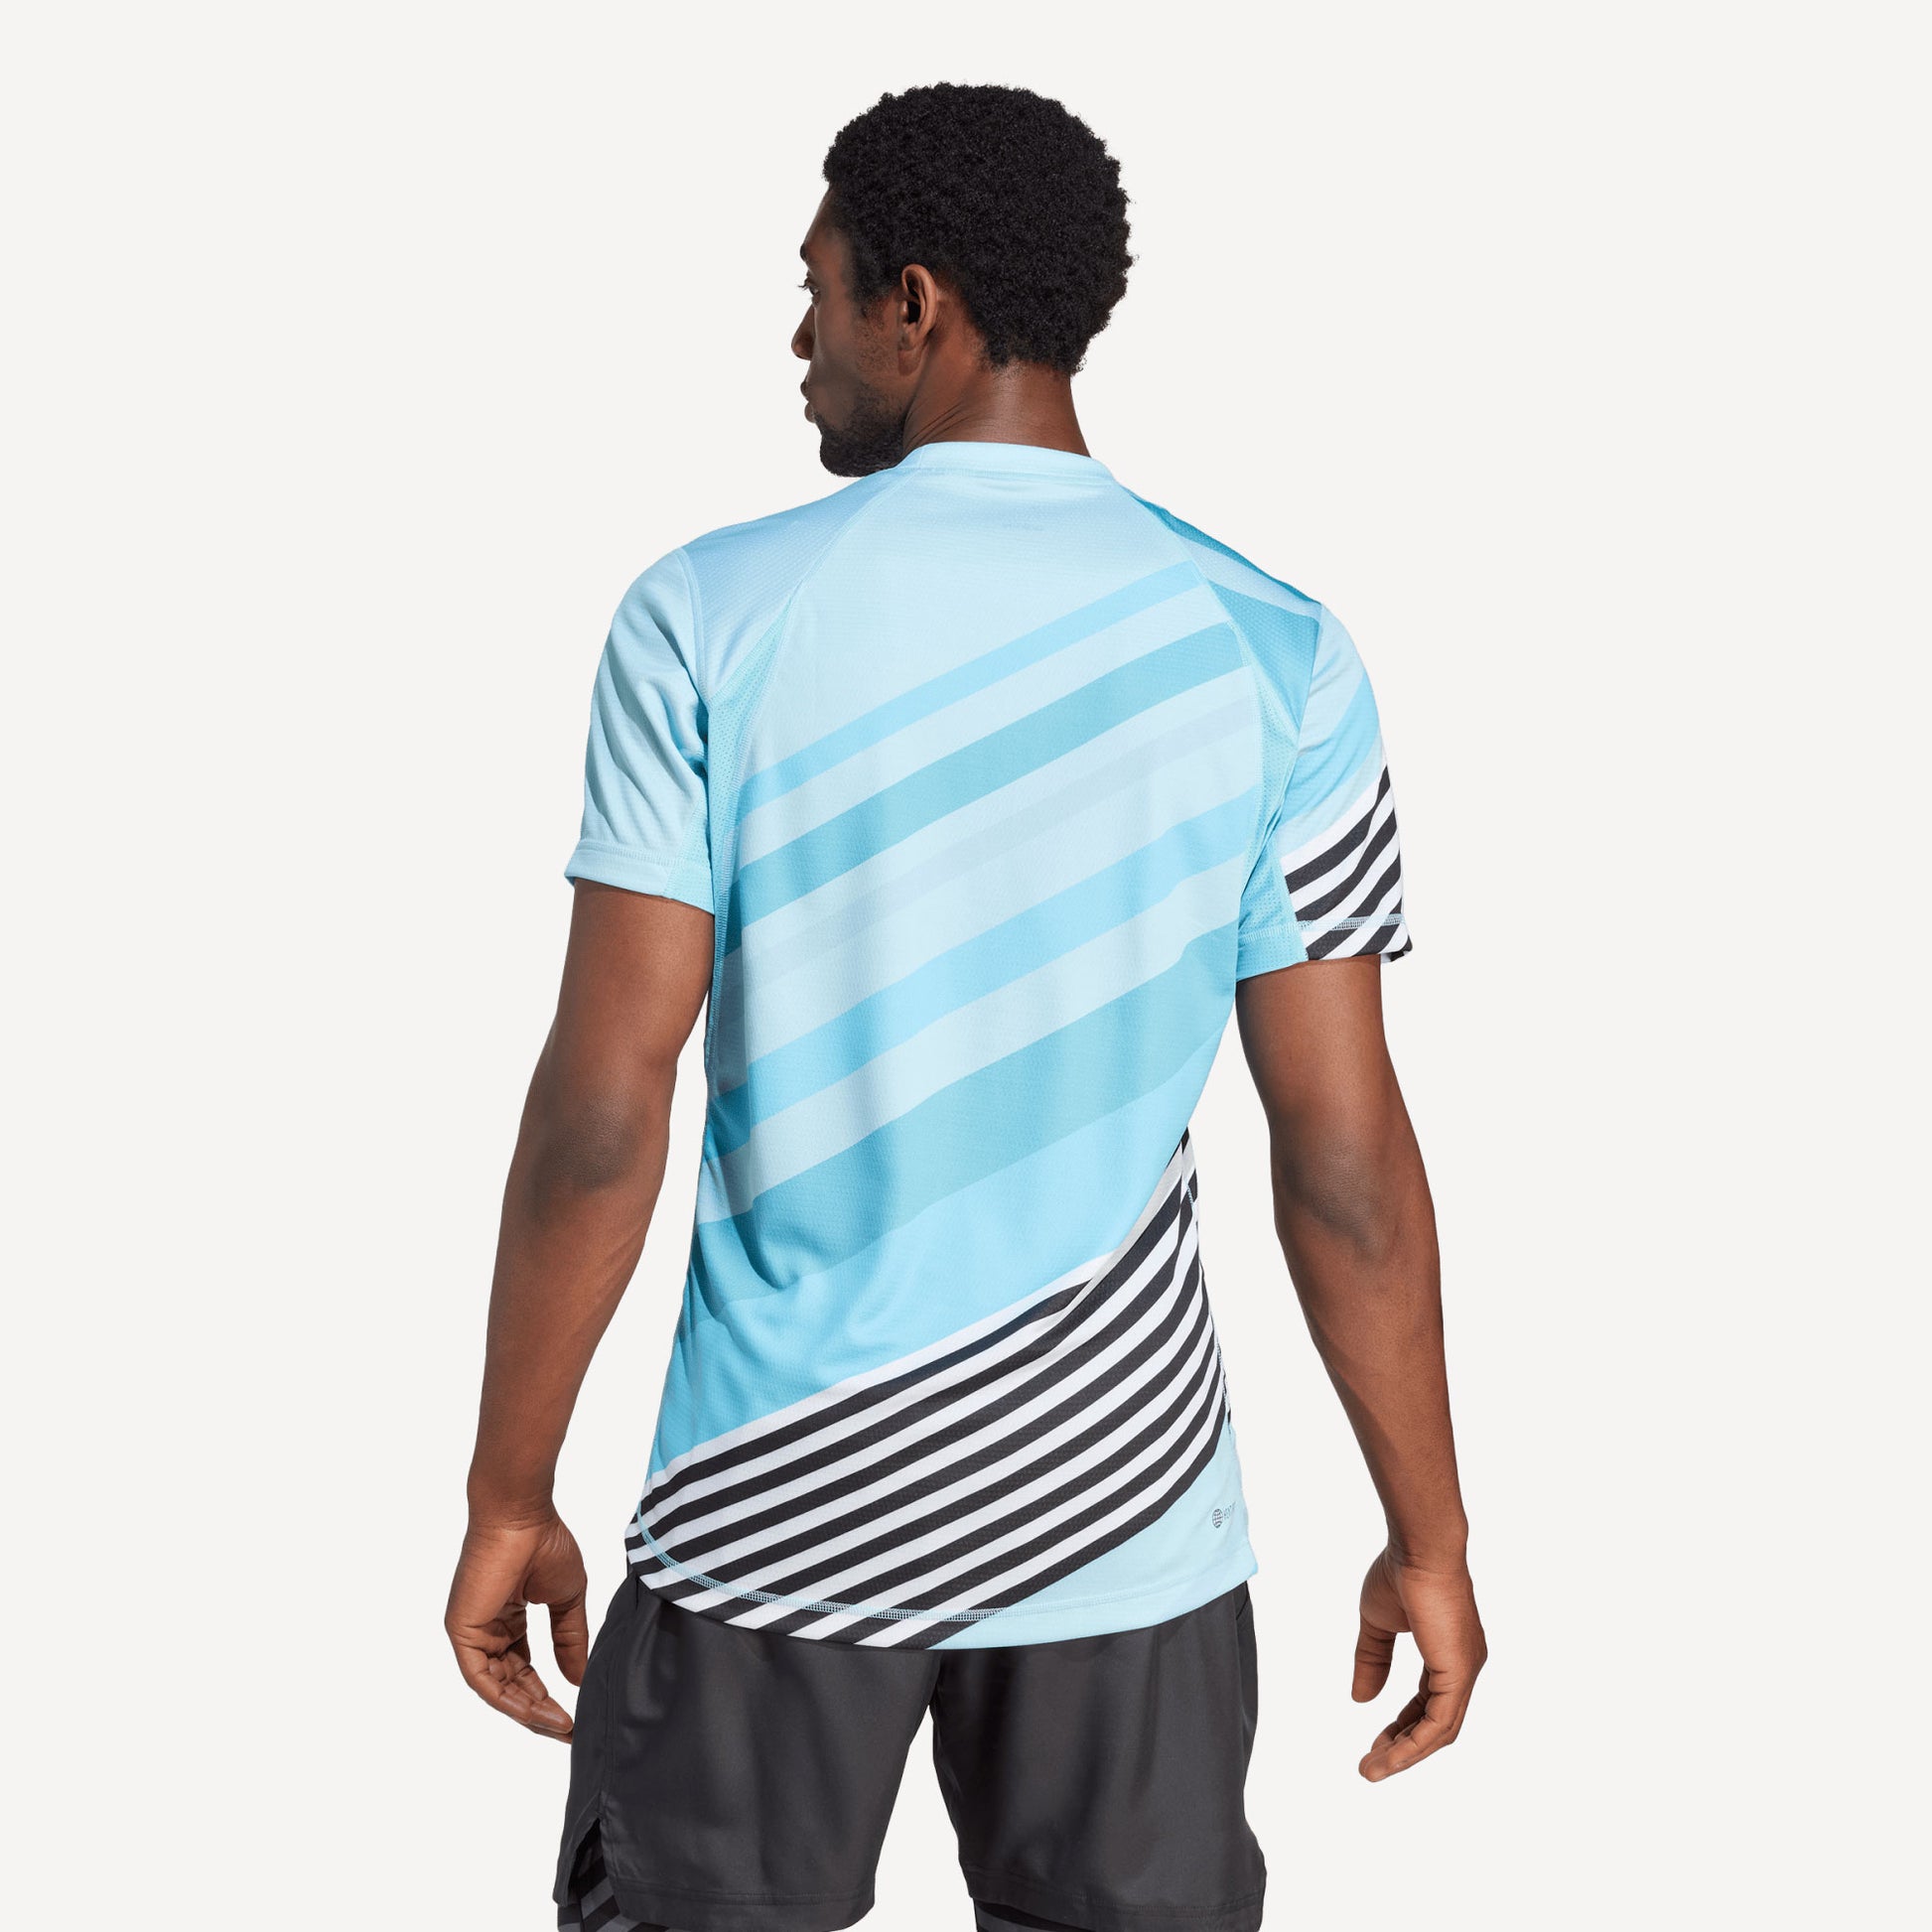 adidas Freelift New York Pro Men's Tennis Shirt Blue (2)